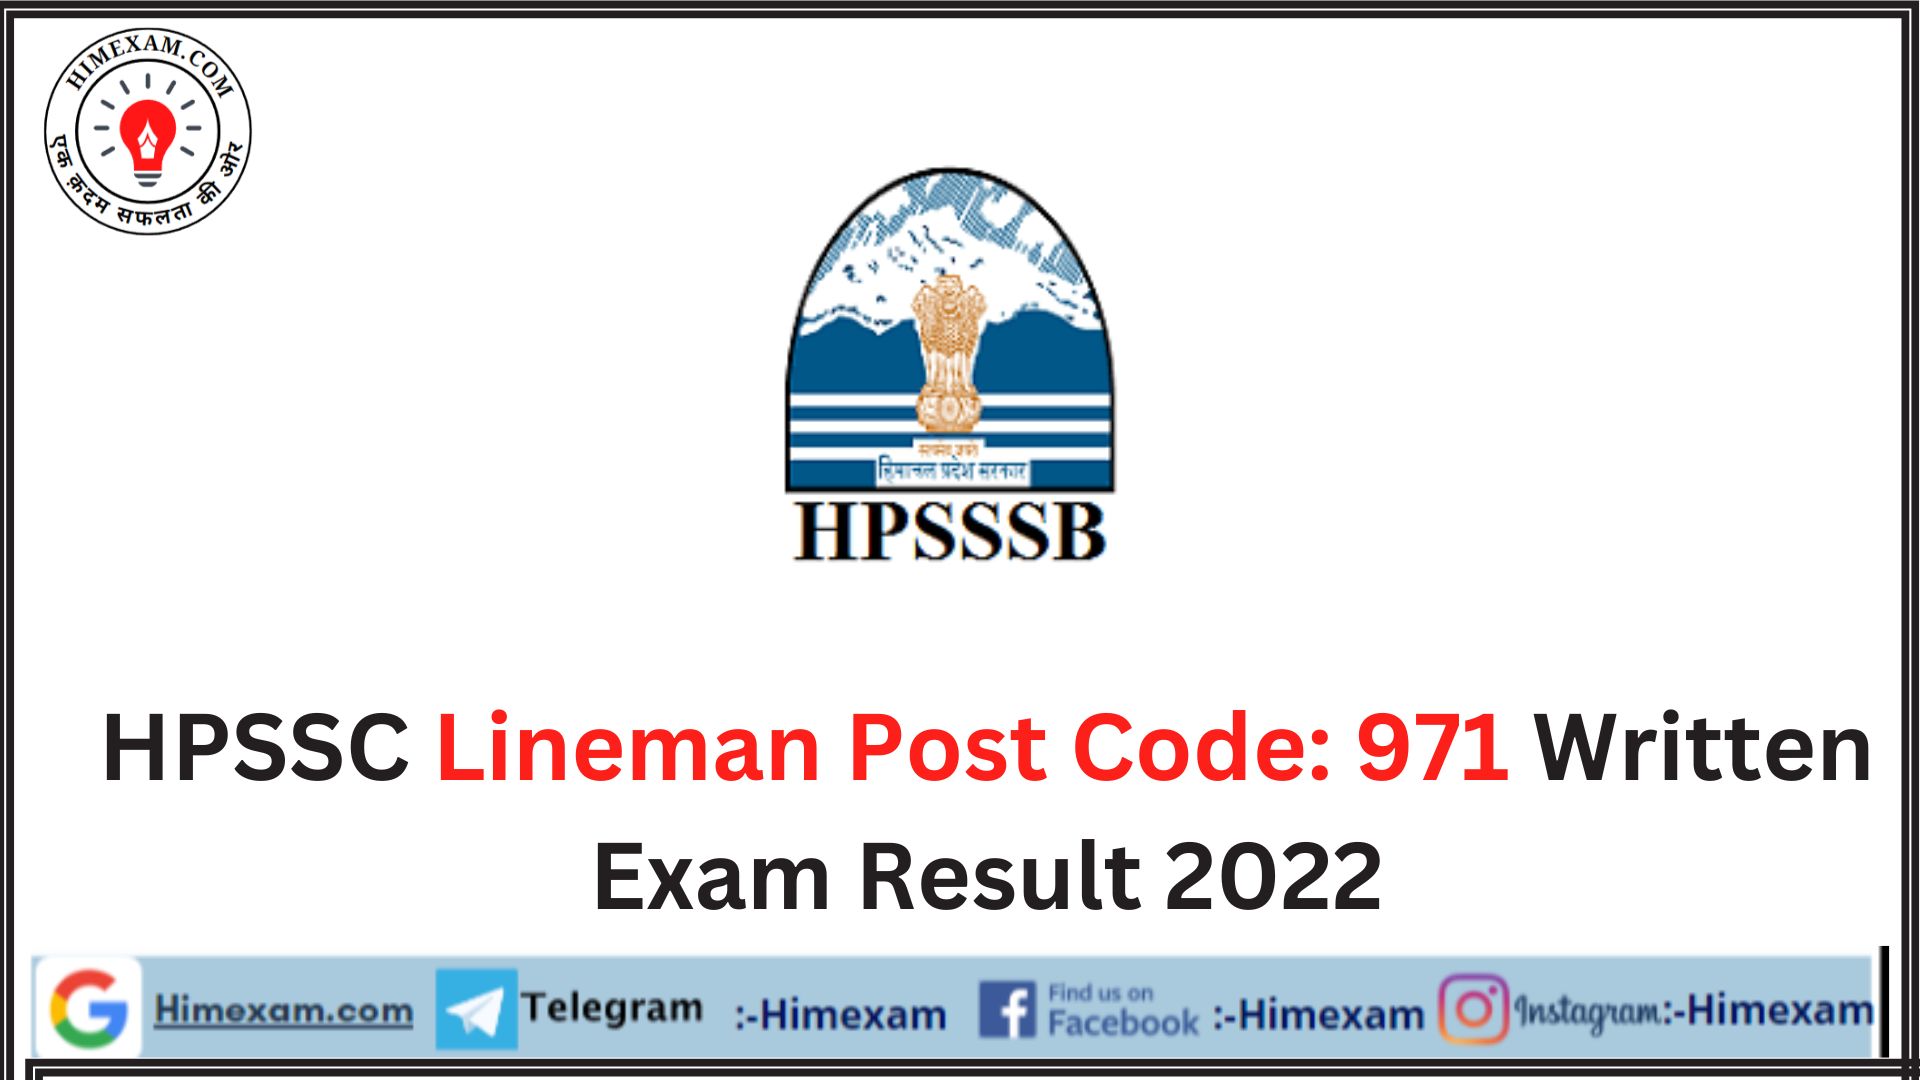 HPSSC Lineman Post Code: 971 Written Exam Result 2022